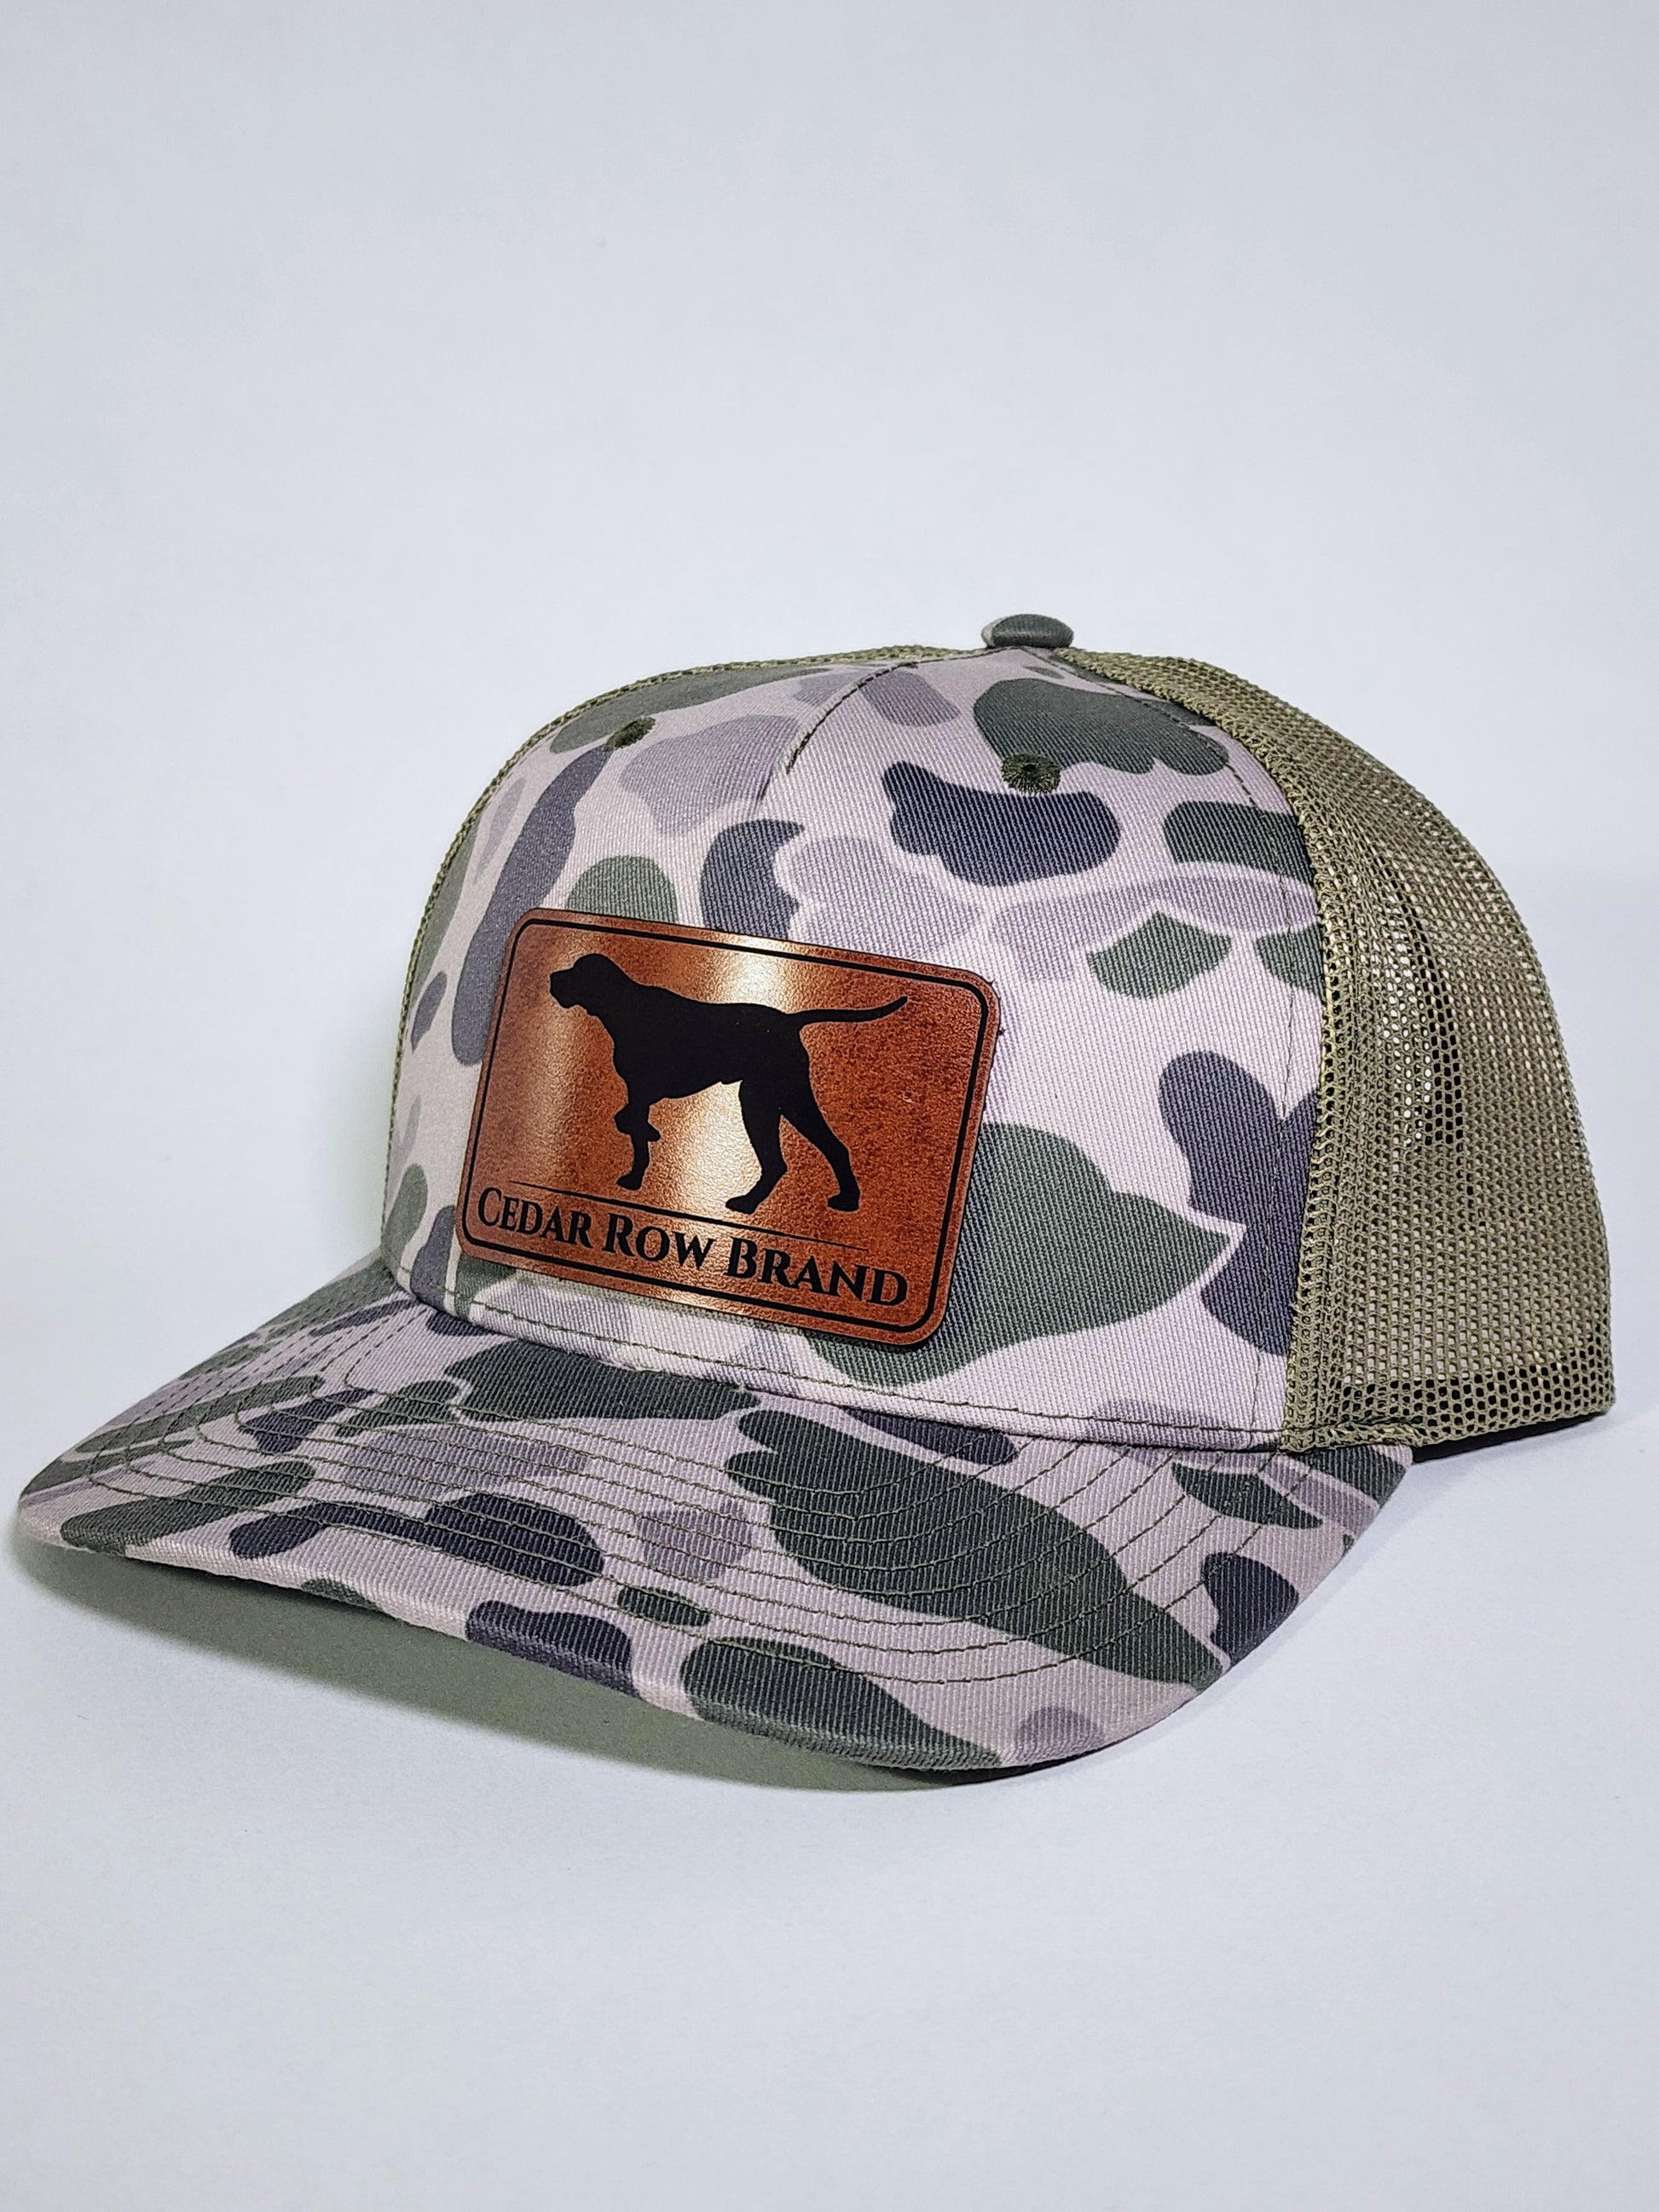 cedar row brand leather patch on a camo trucker hat with a bird dog design